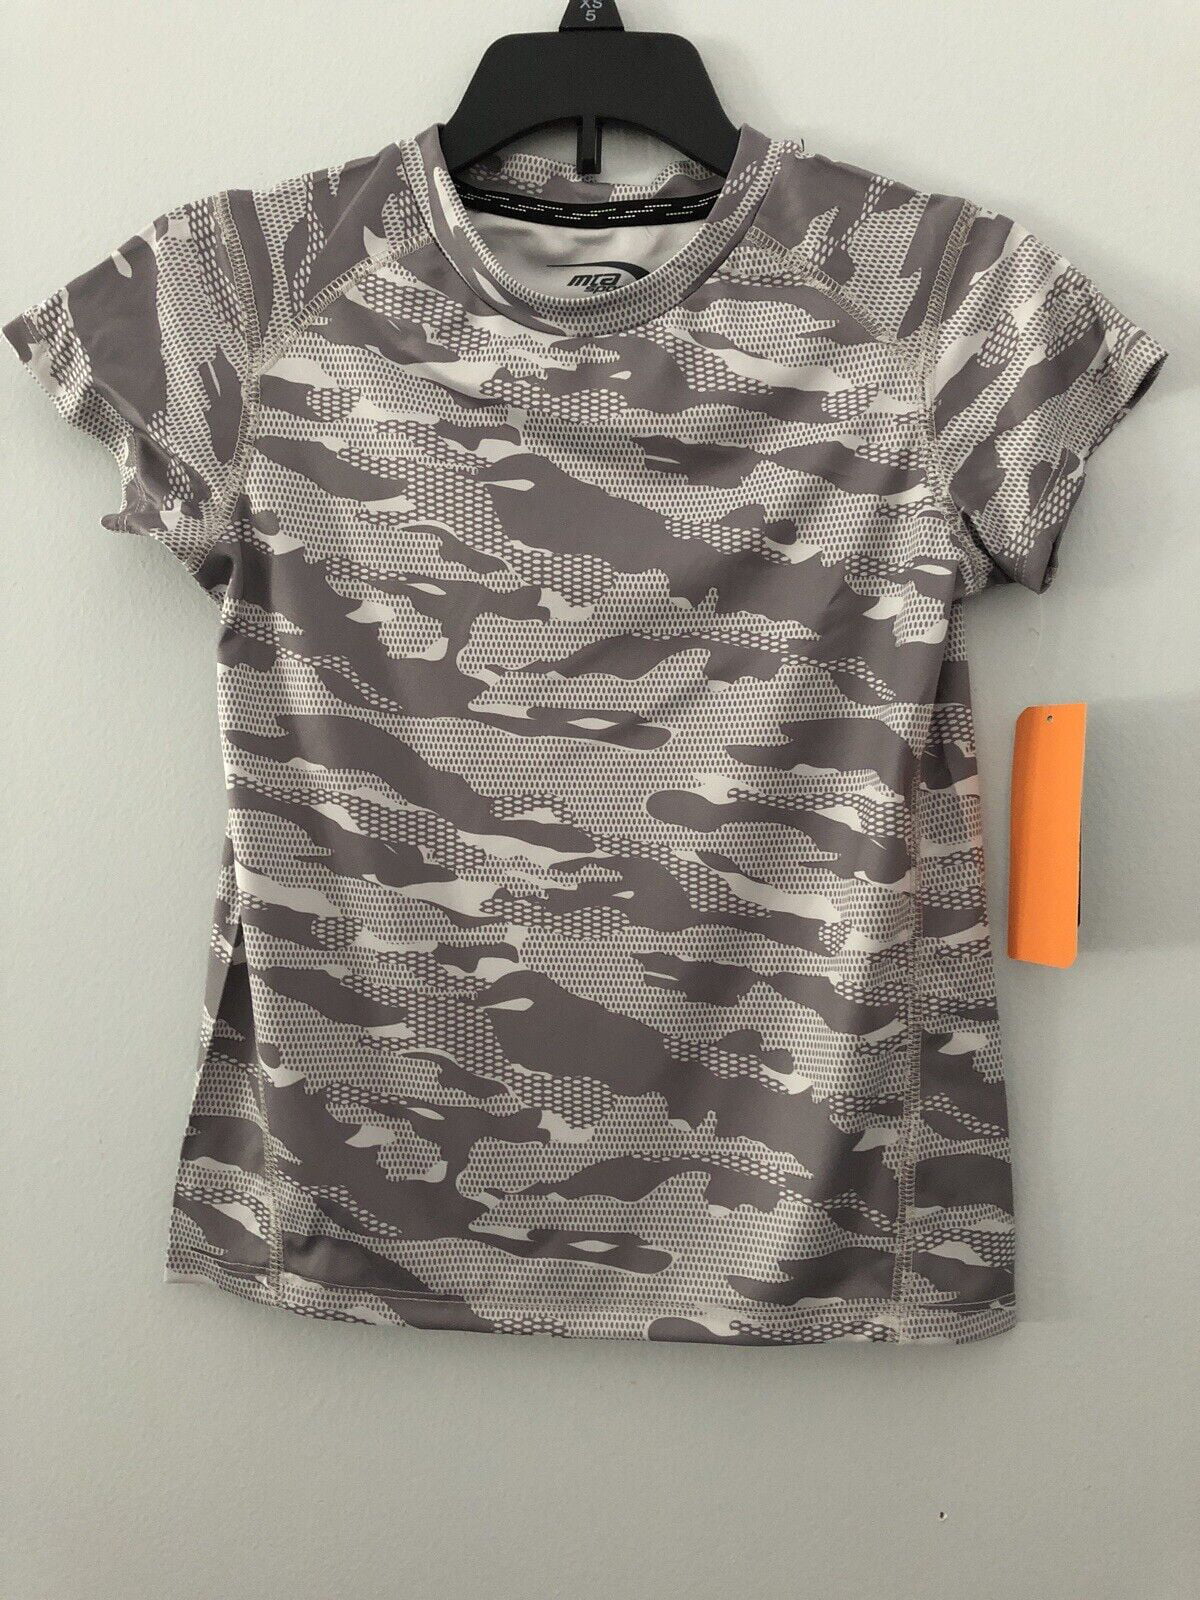 WTF MTA Short-Sleeve Unisex T-Shirt